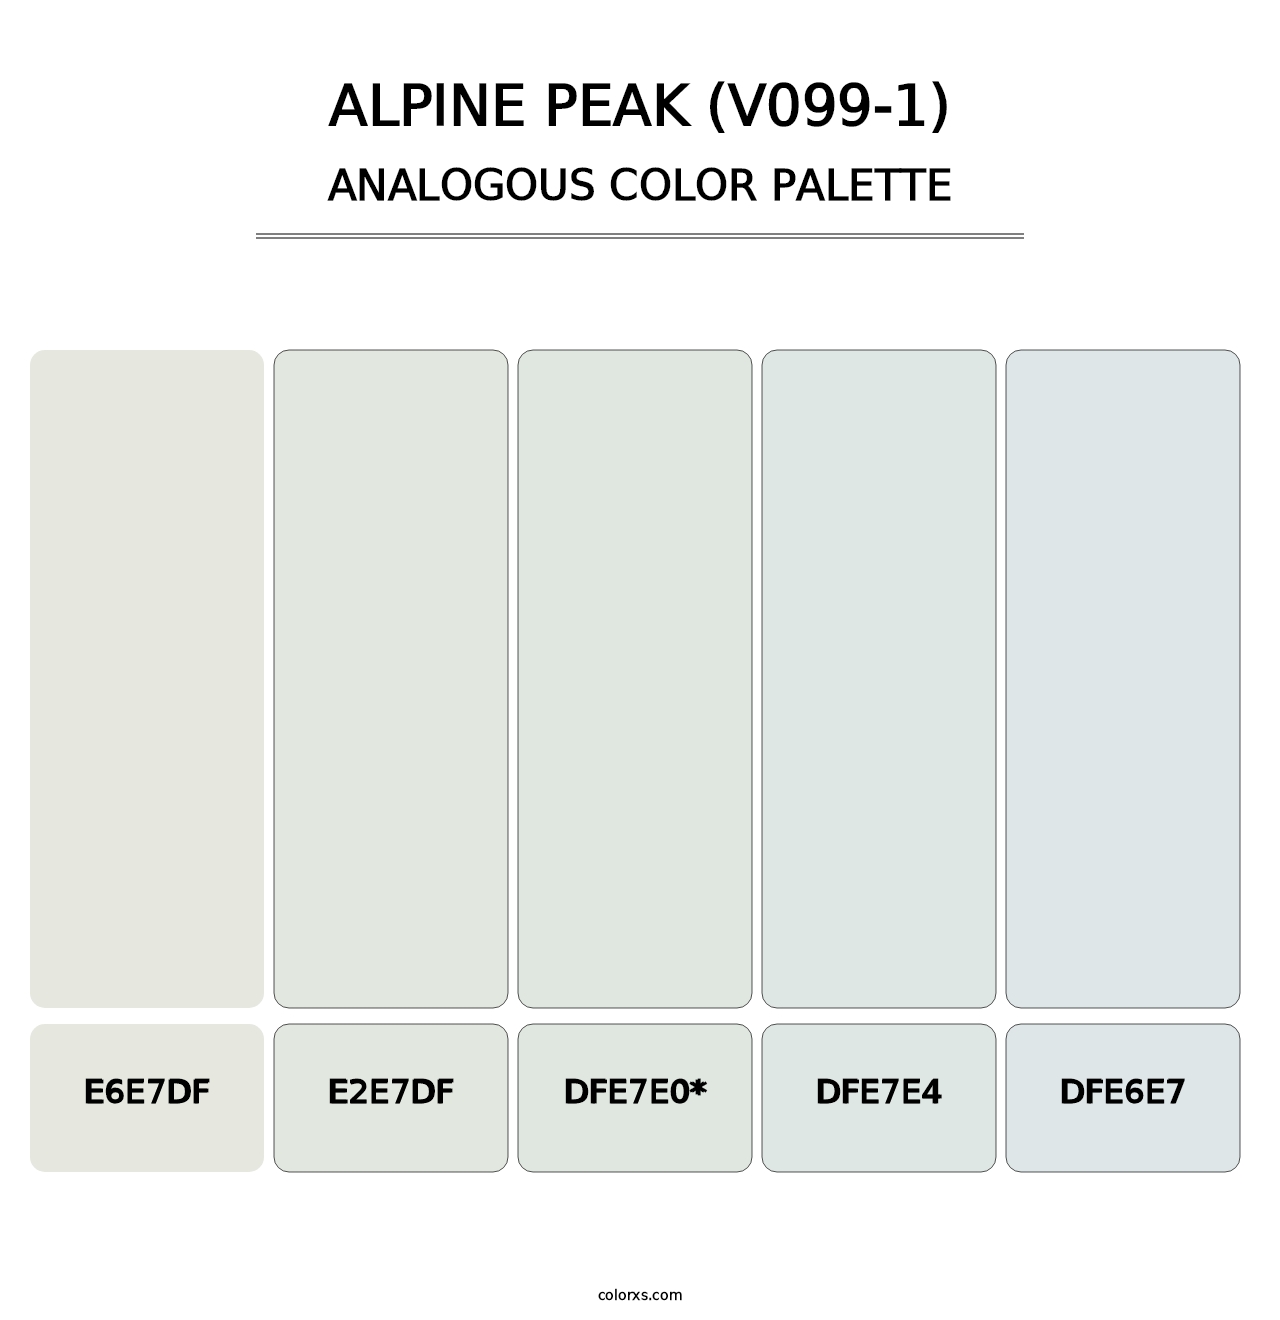 Alpine Peak (V099-1) - Analogous Color Palette